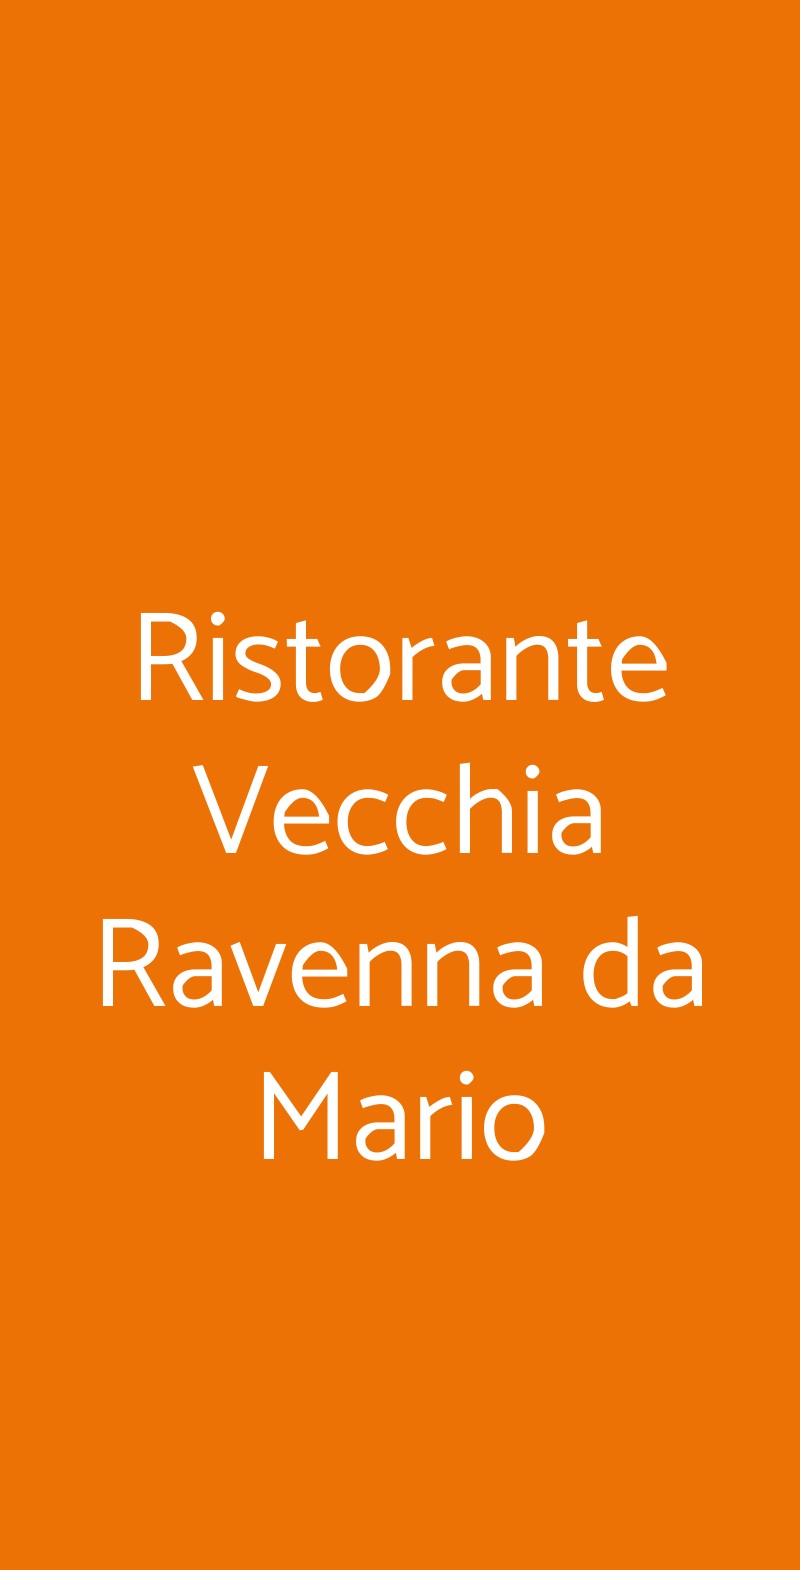 Ristorante Vecchia Ravenna da Mario Ravenna menù 1 pagina